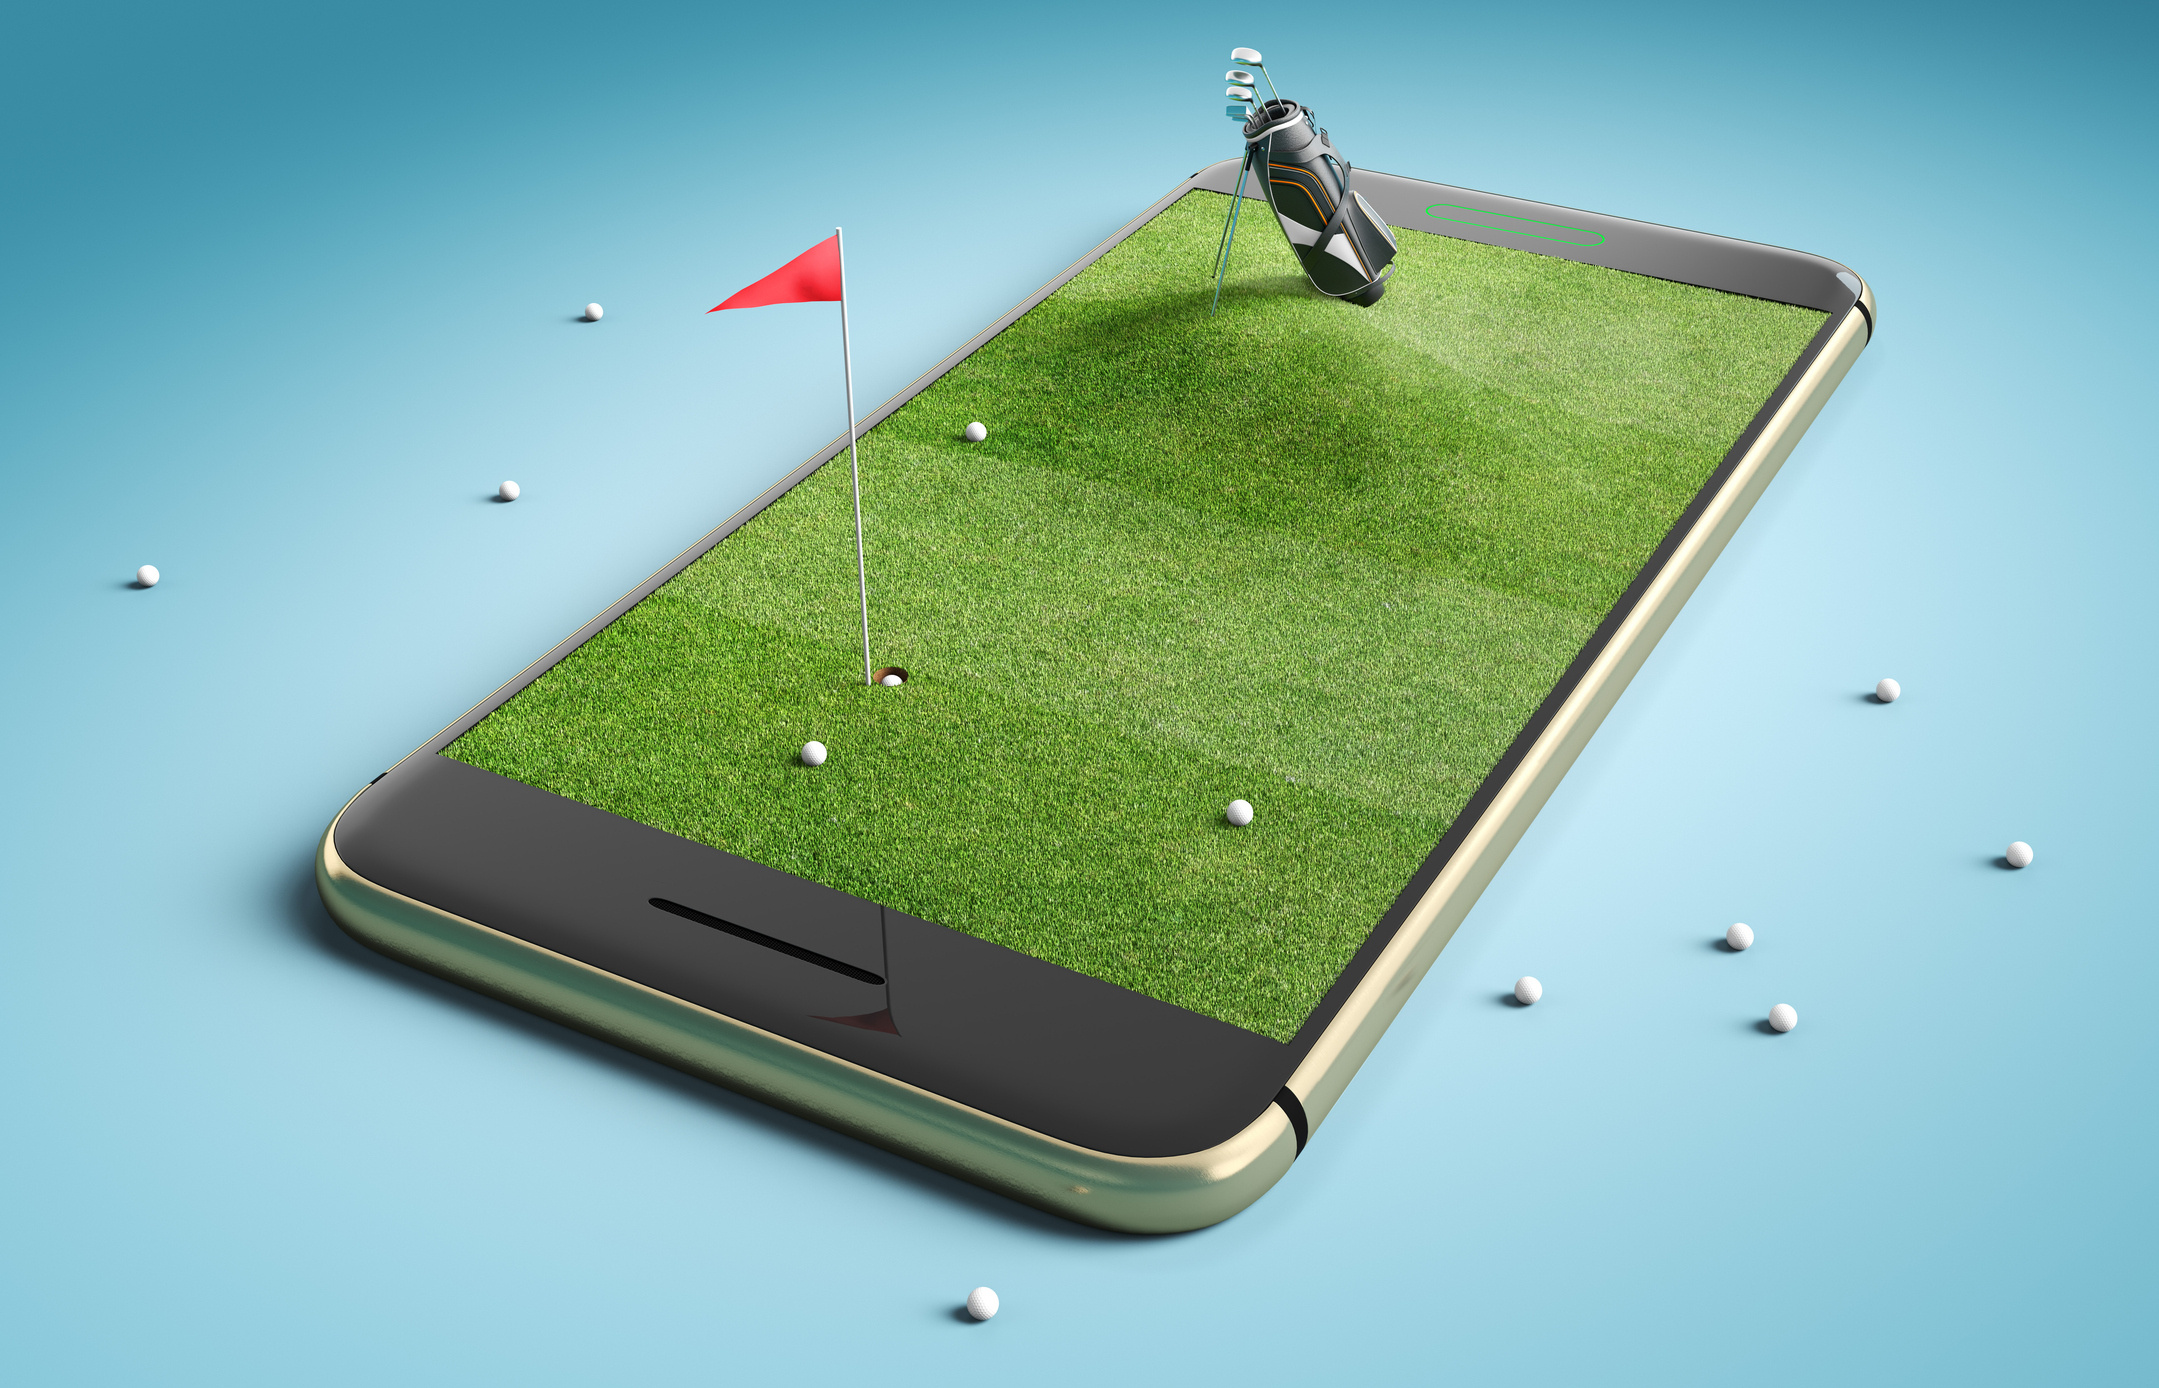 Fantasy golf on a smartphone